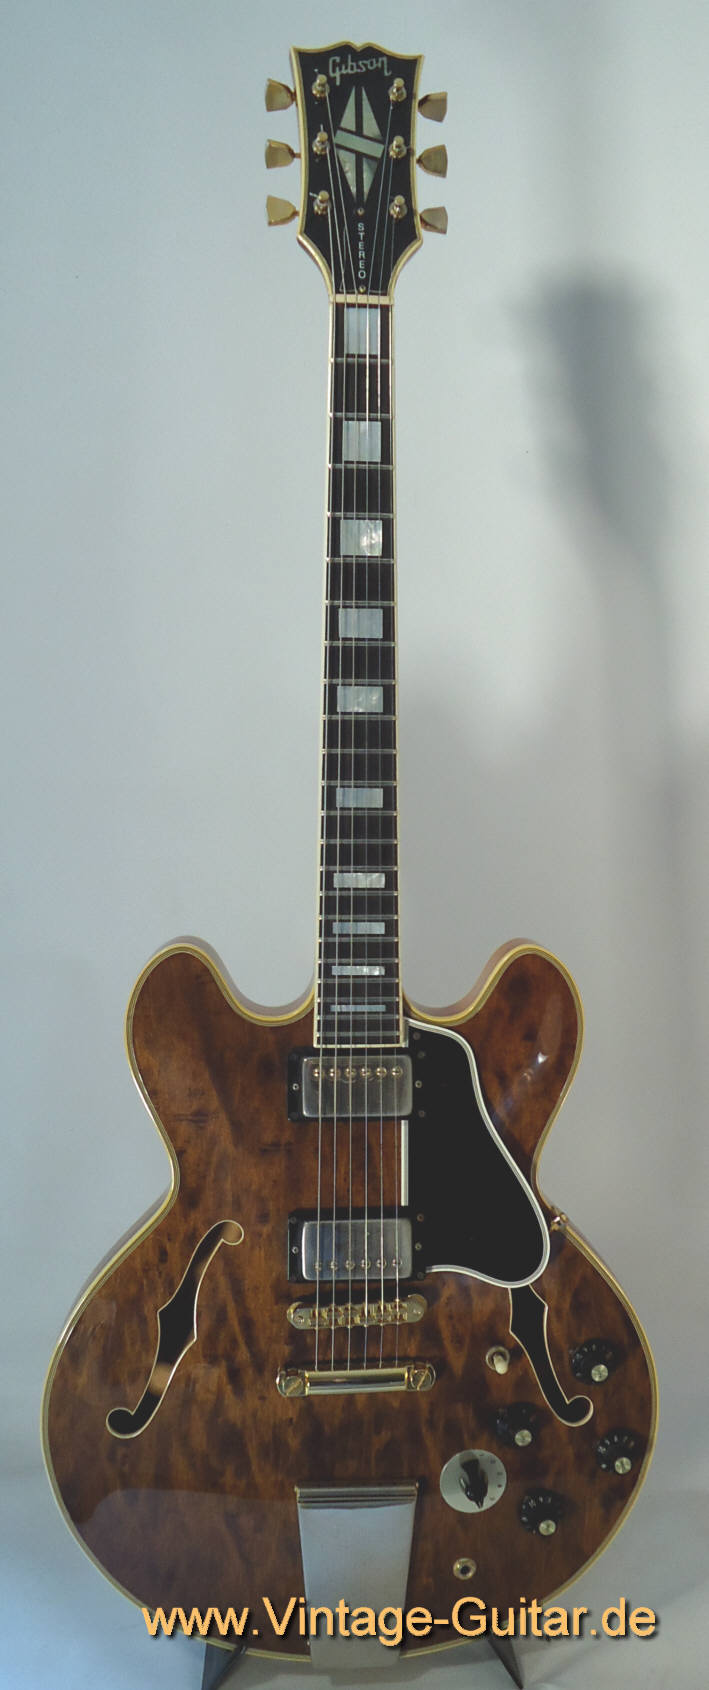 Gibson_ES-355-1974-walnut-1.jpg